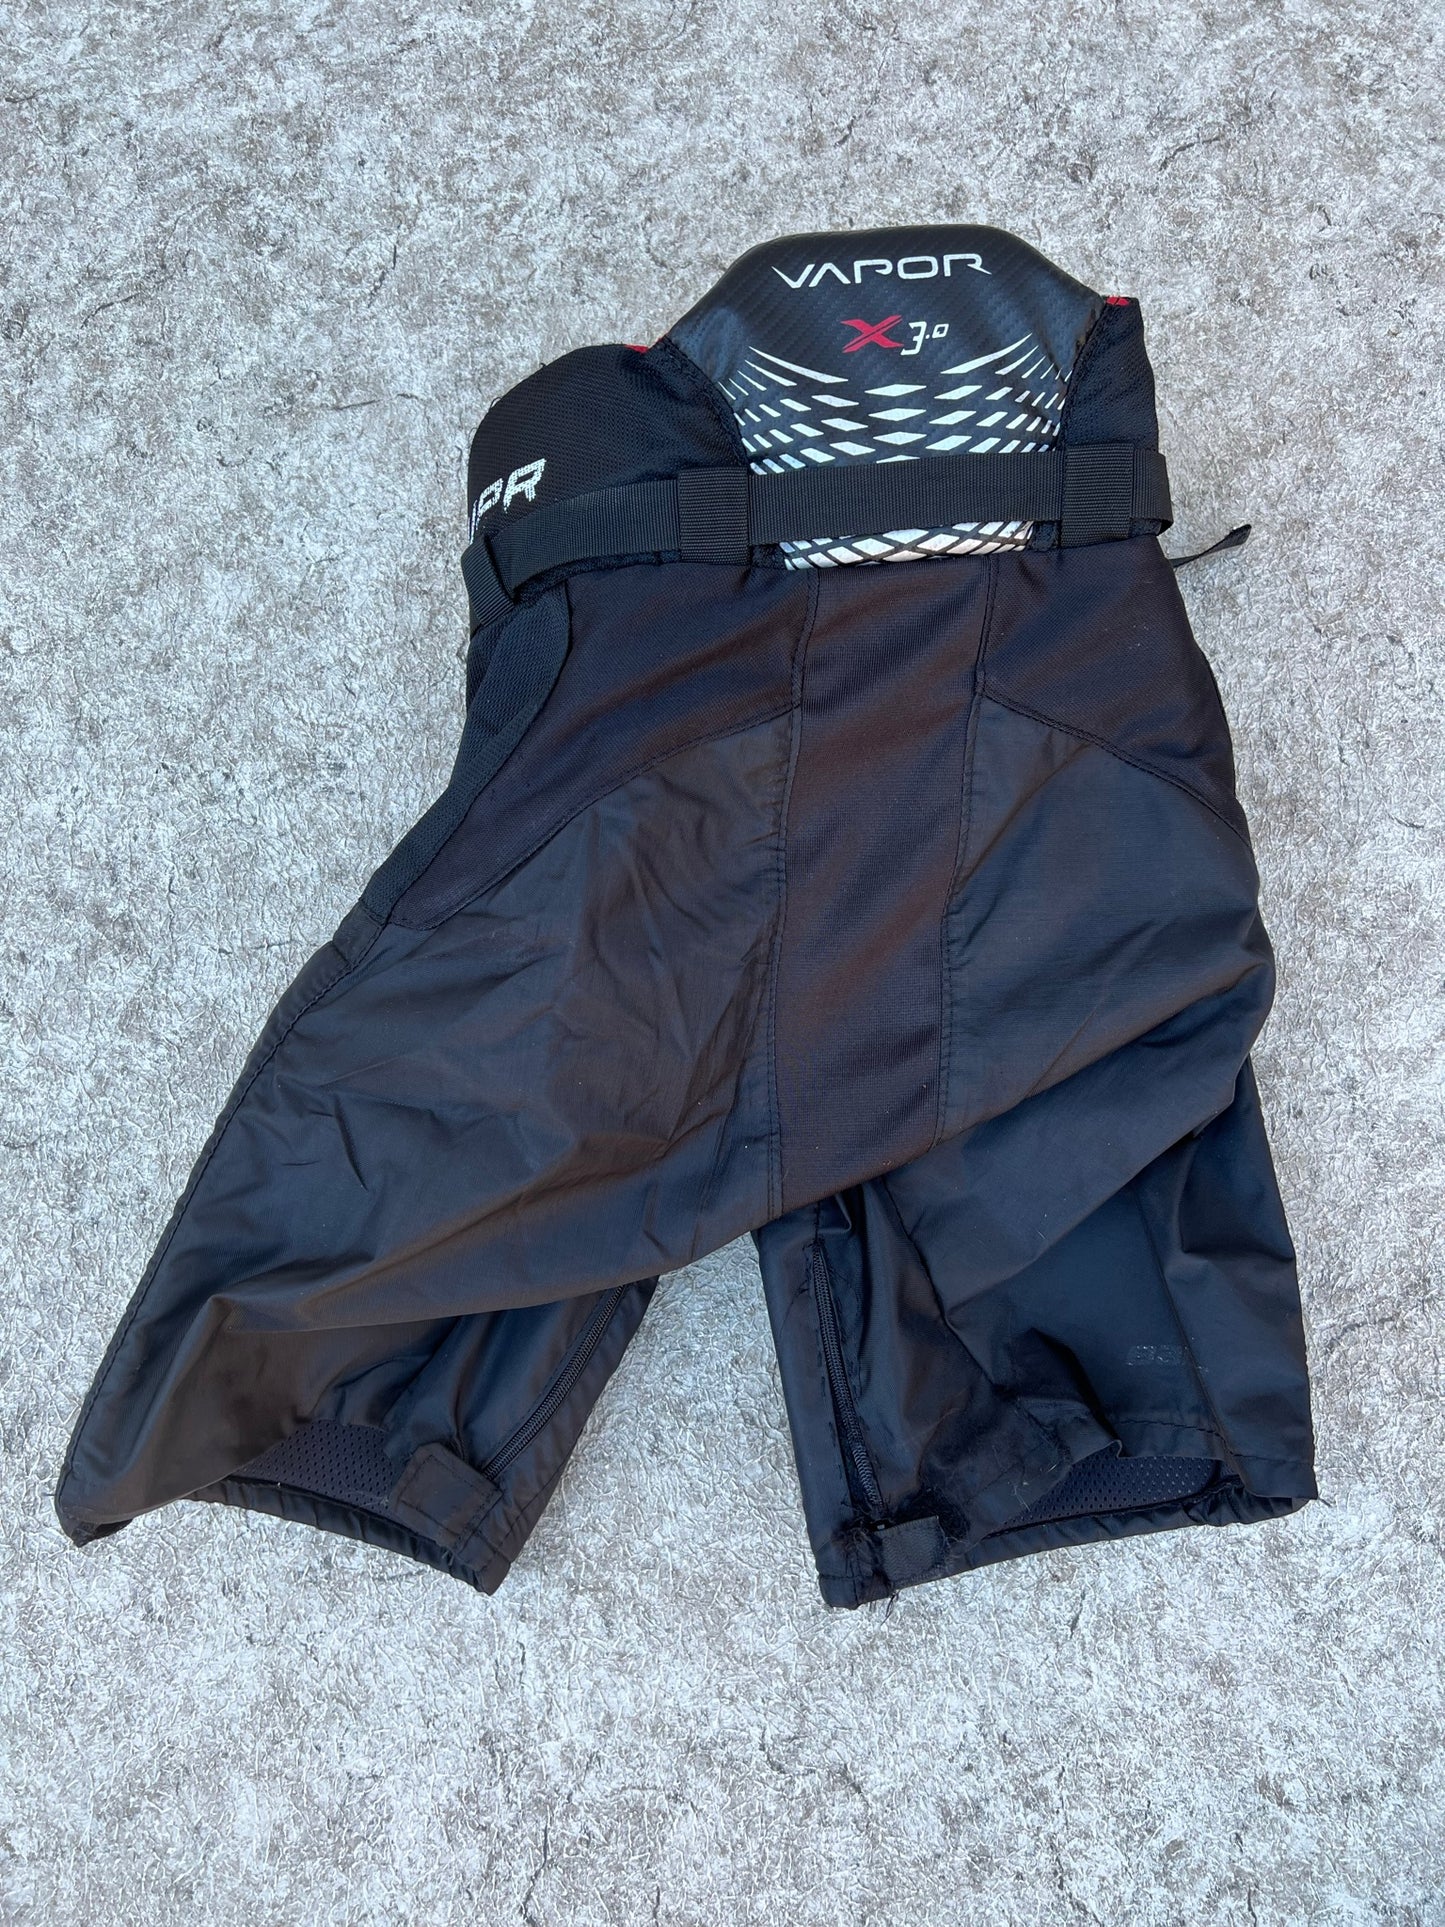 Hockey Pants Child Size Junior Medium Bauer Vapor Black Minor Wear